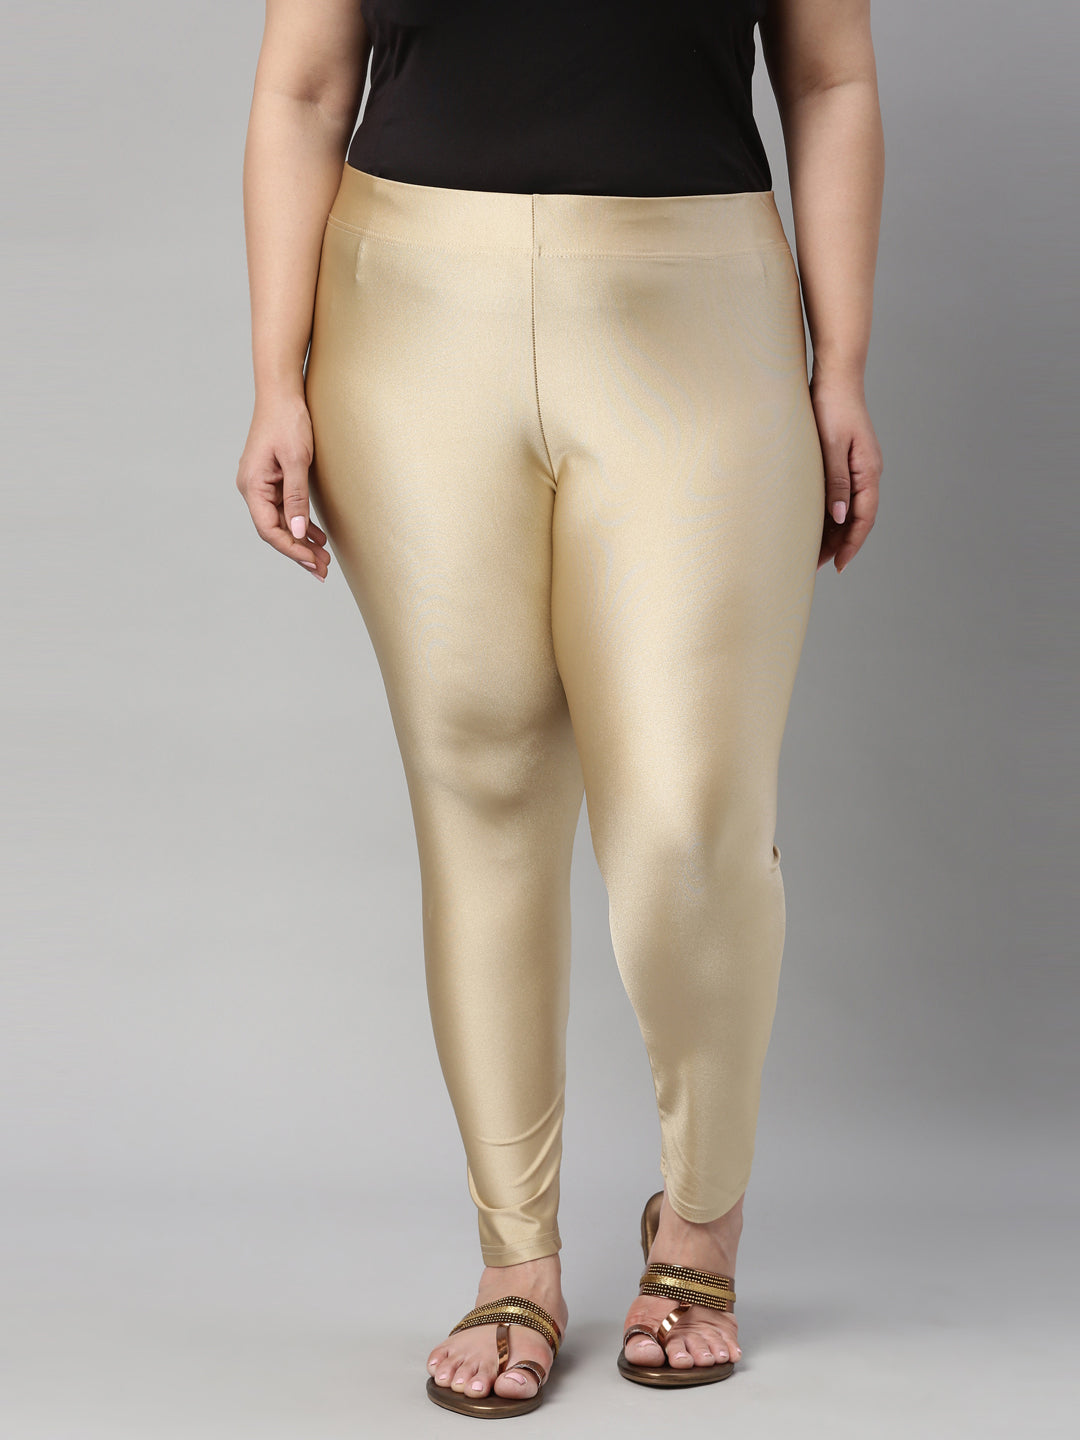 Buy DP Gold Leggings for Women by GO COLORS Online | Ajio.com